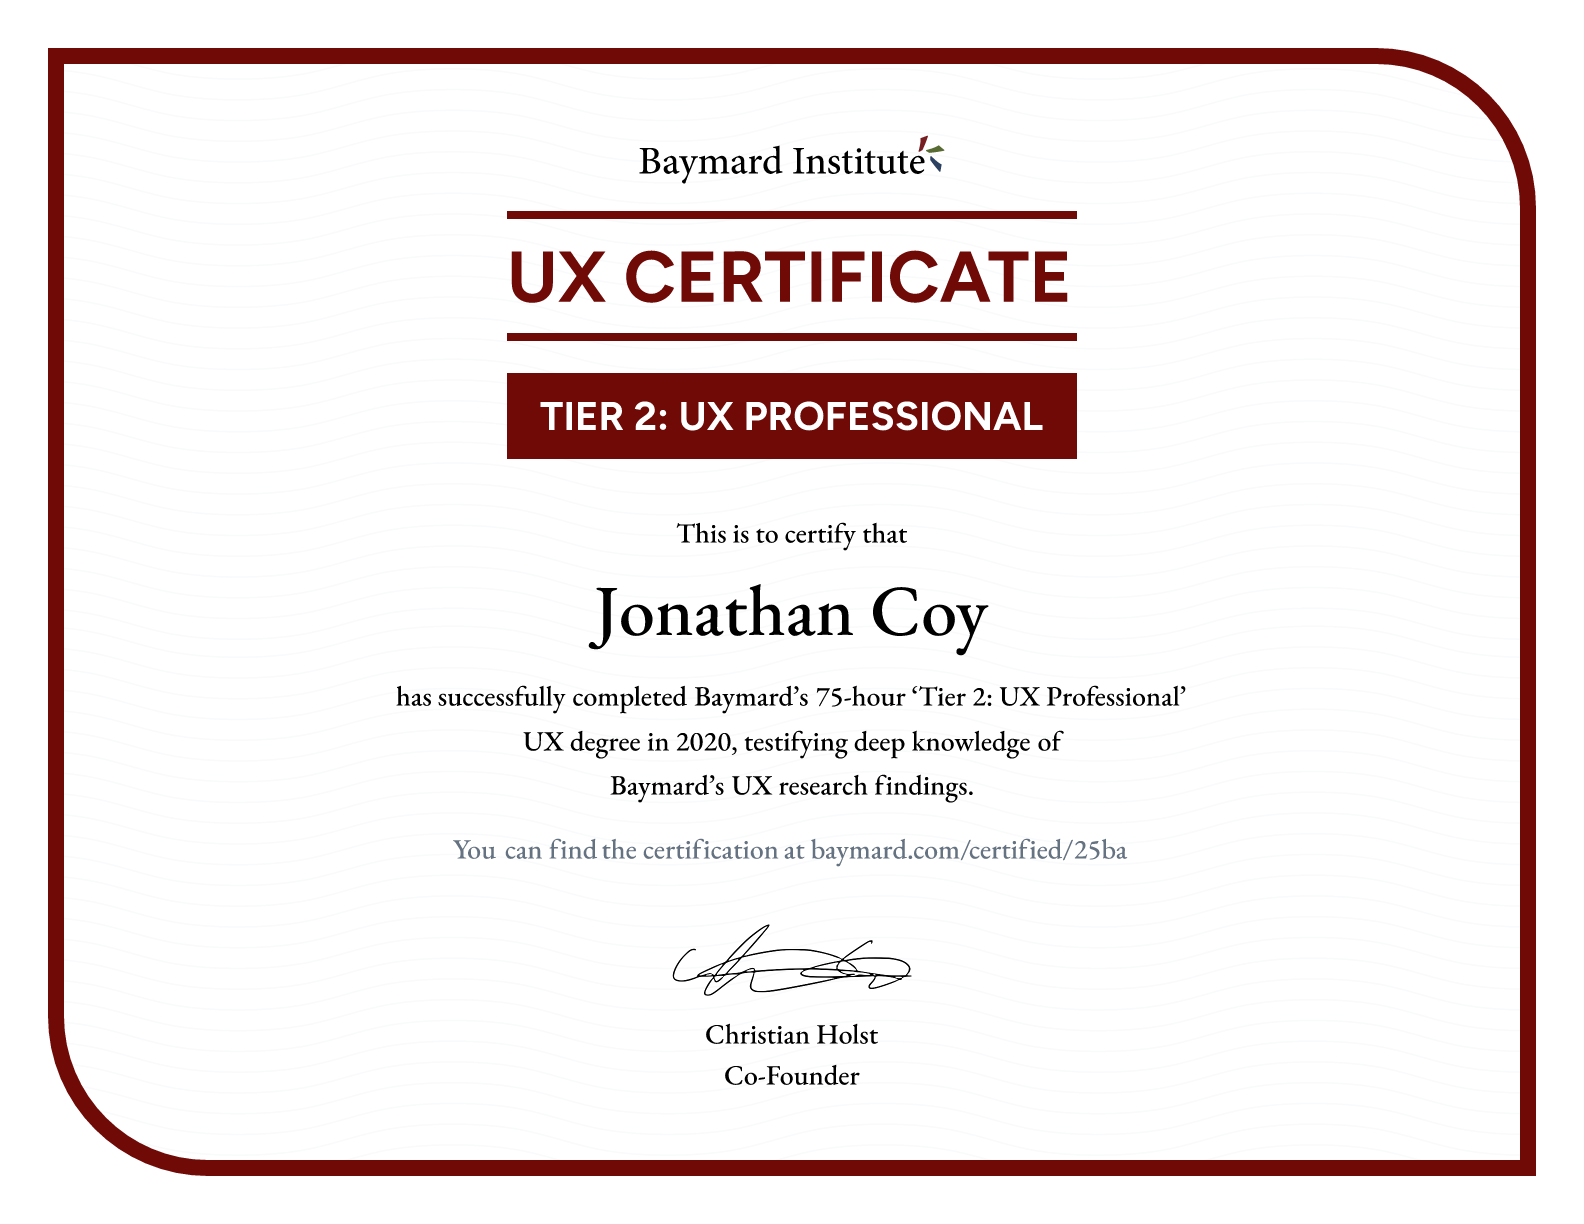 Jonathan Coy’s certificate